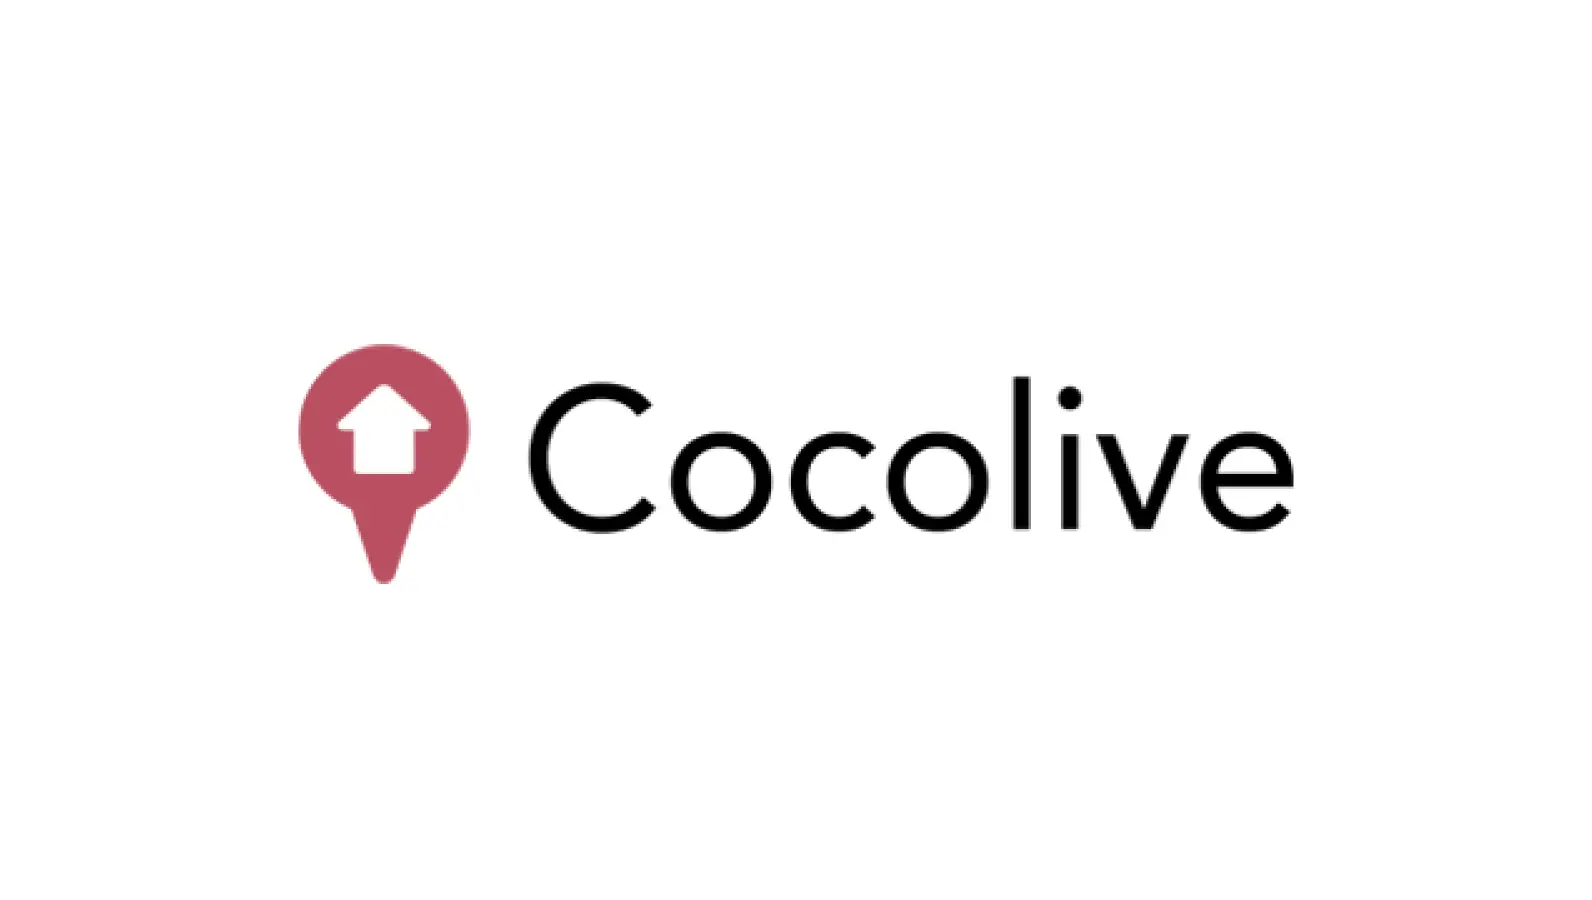 XTech Ventures・みずほキャピタル等を引受先とした第三者割当増資、Cocolive株式会社、総額1億円の資金調達を実施の画像